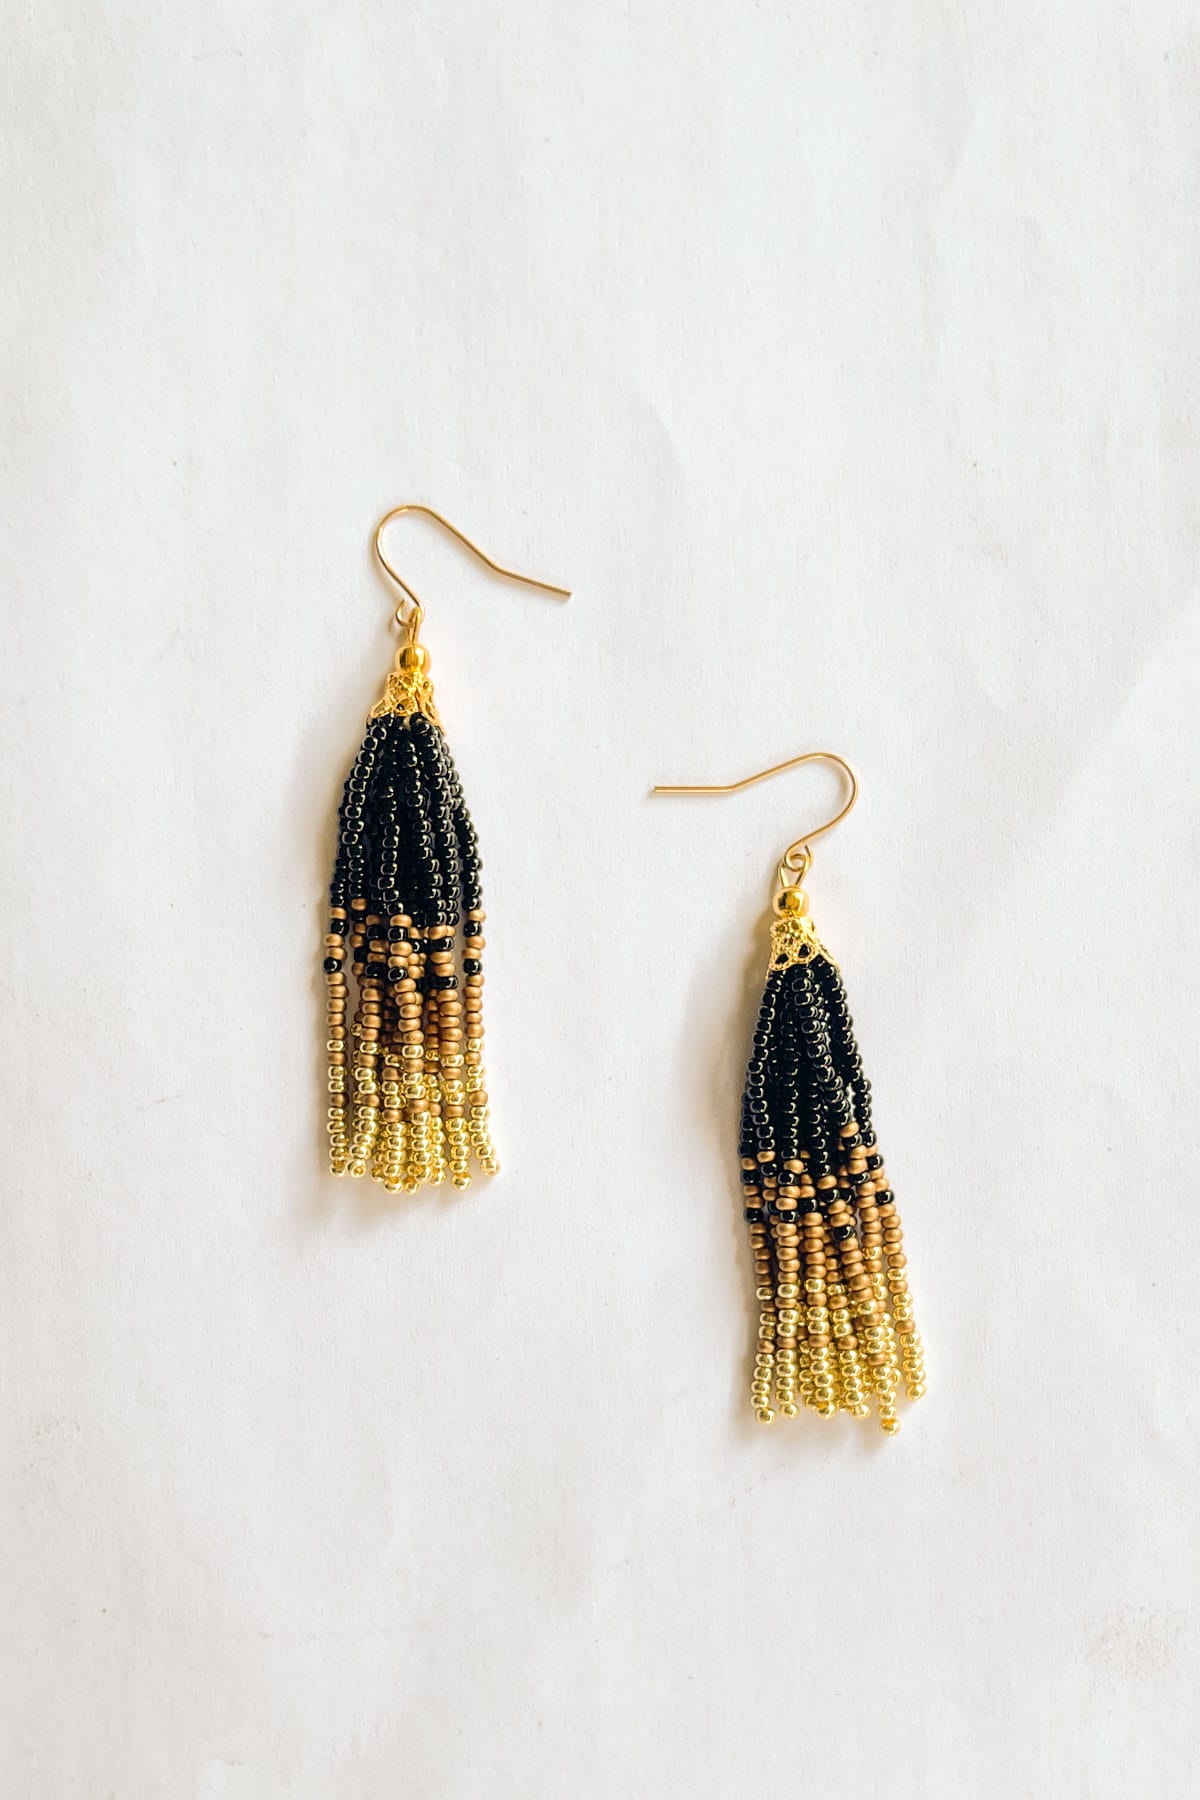 A pair of black, bronze and gold beaded tassel earrings.